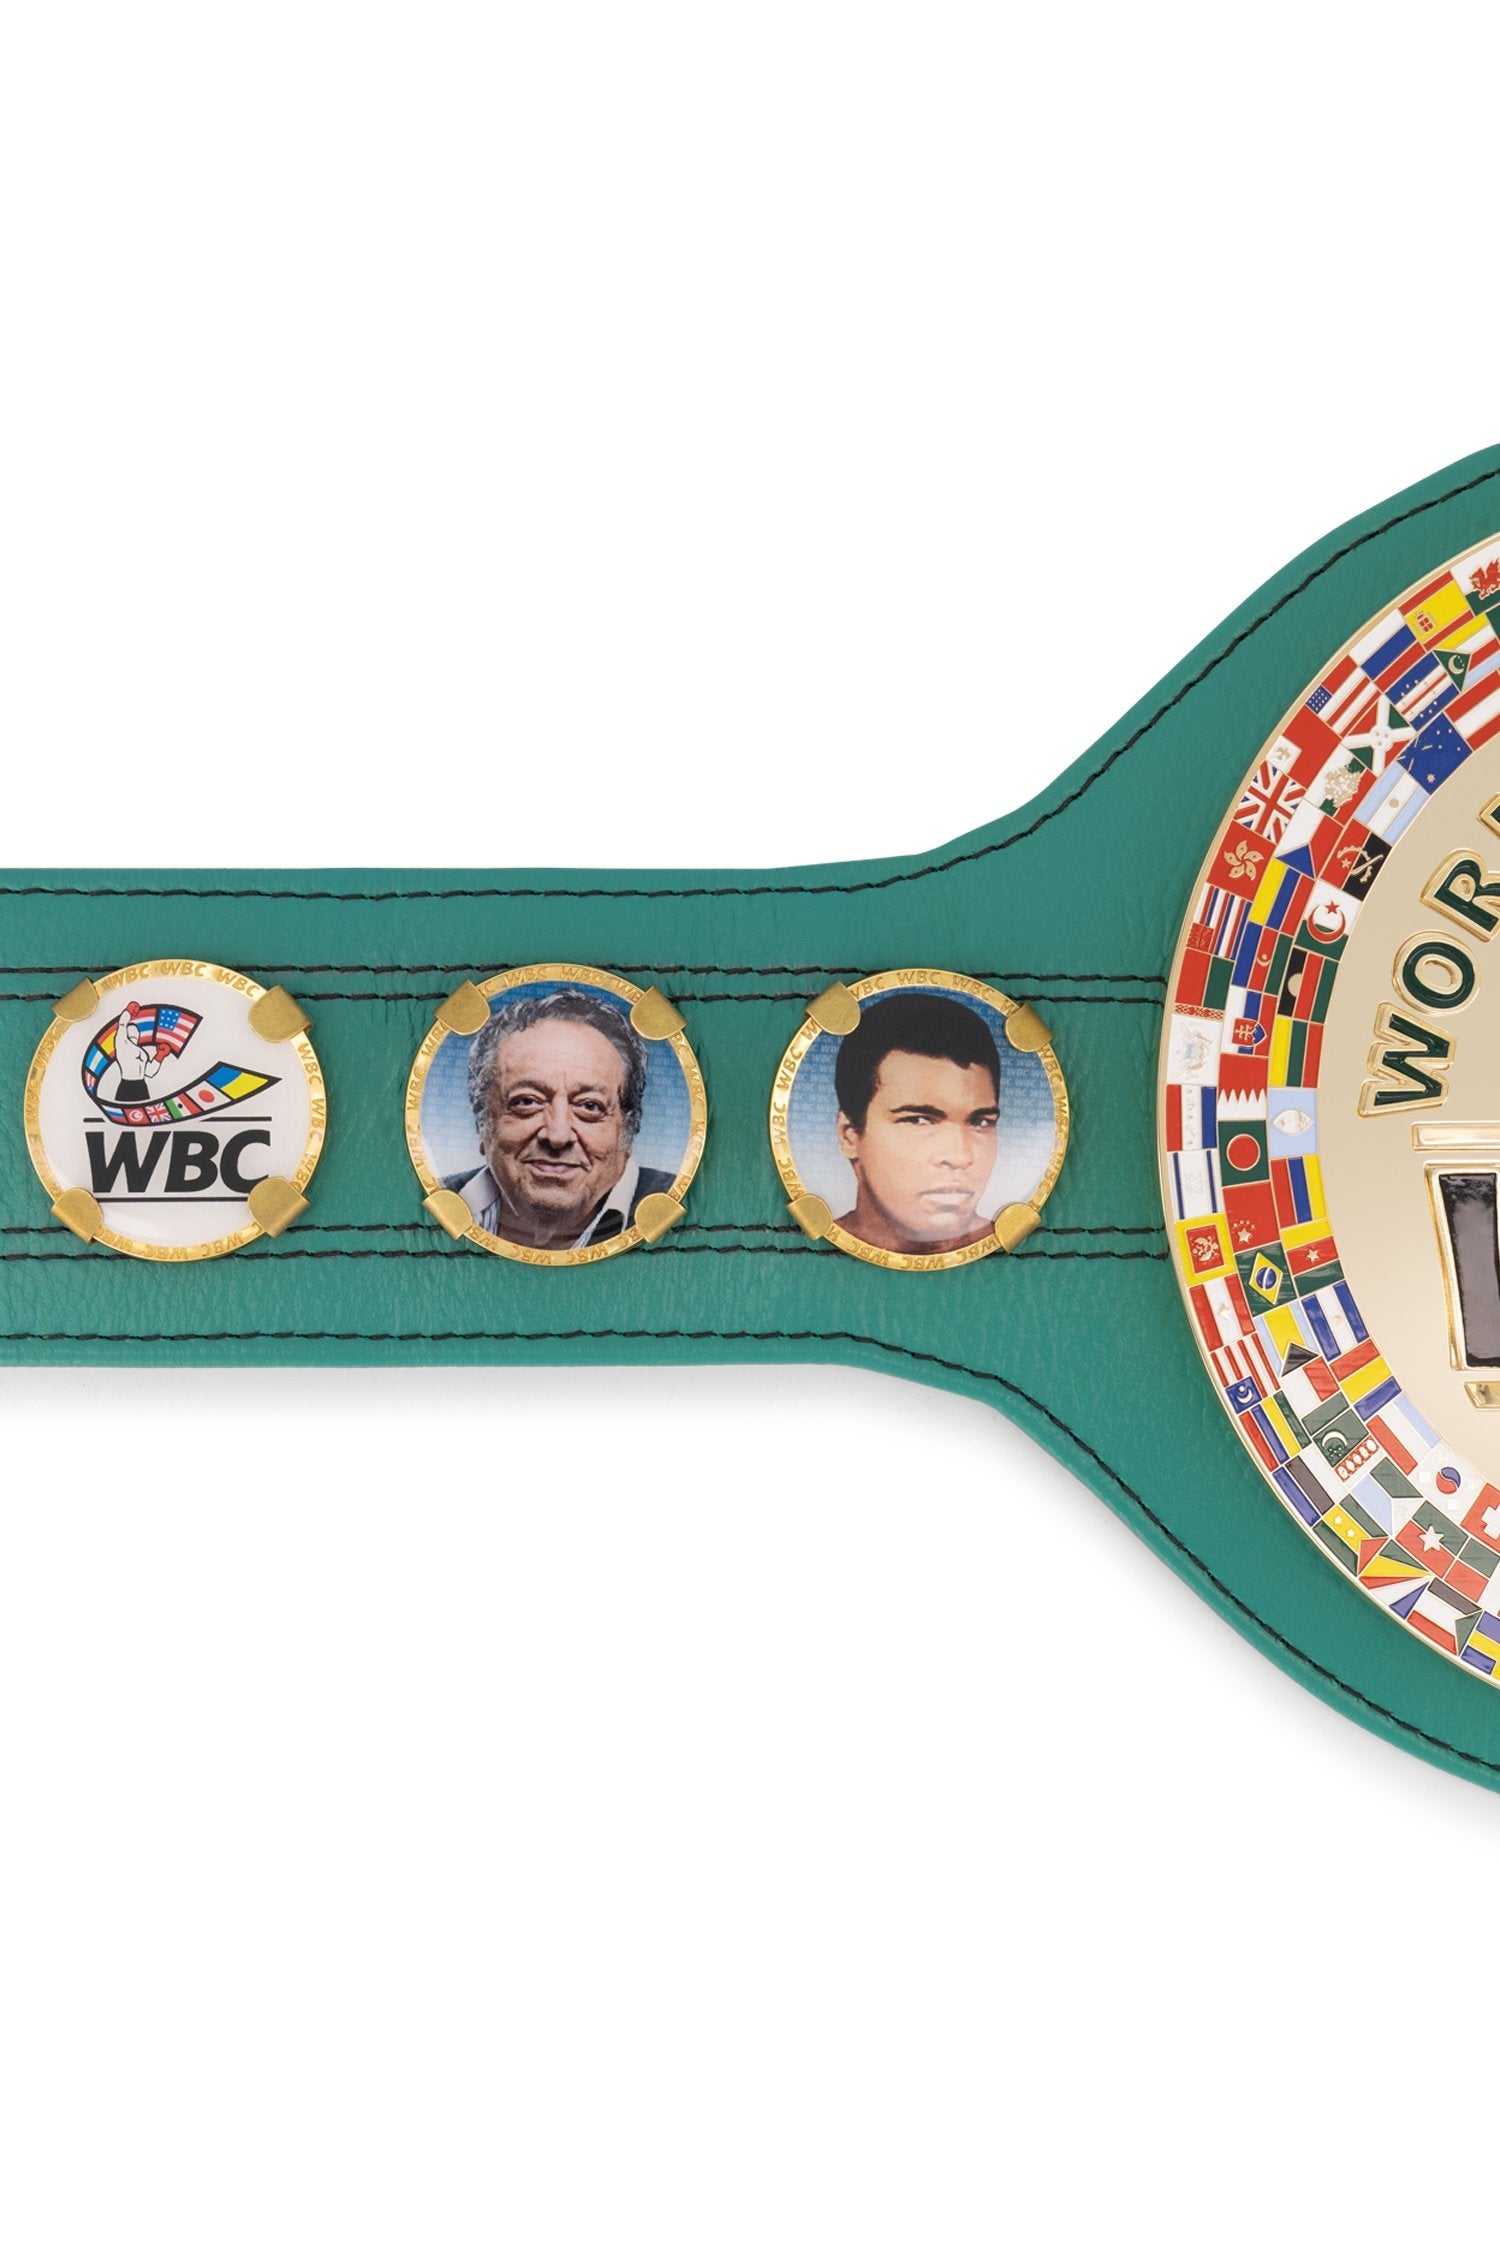 WBC Store Replica Belts WBC - Custom Championship Replica Belt